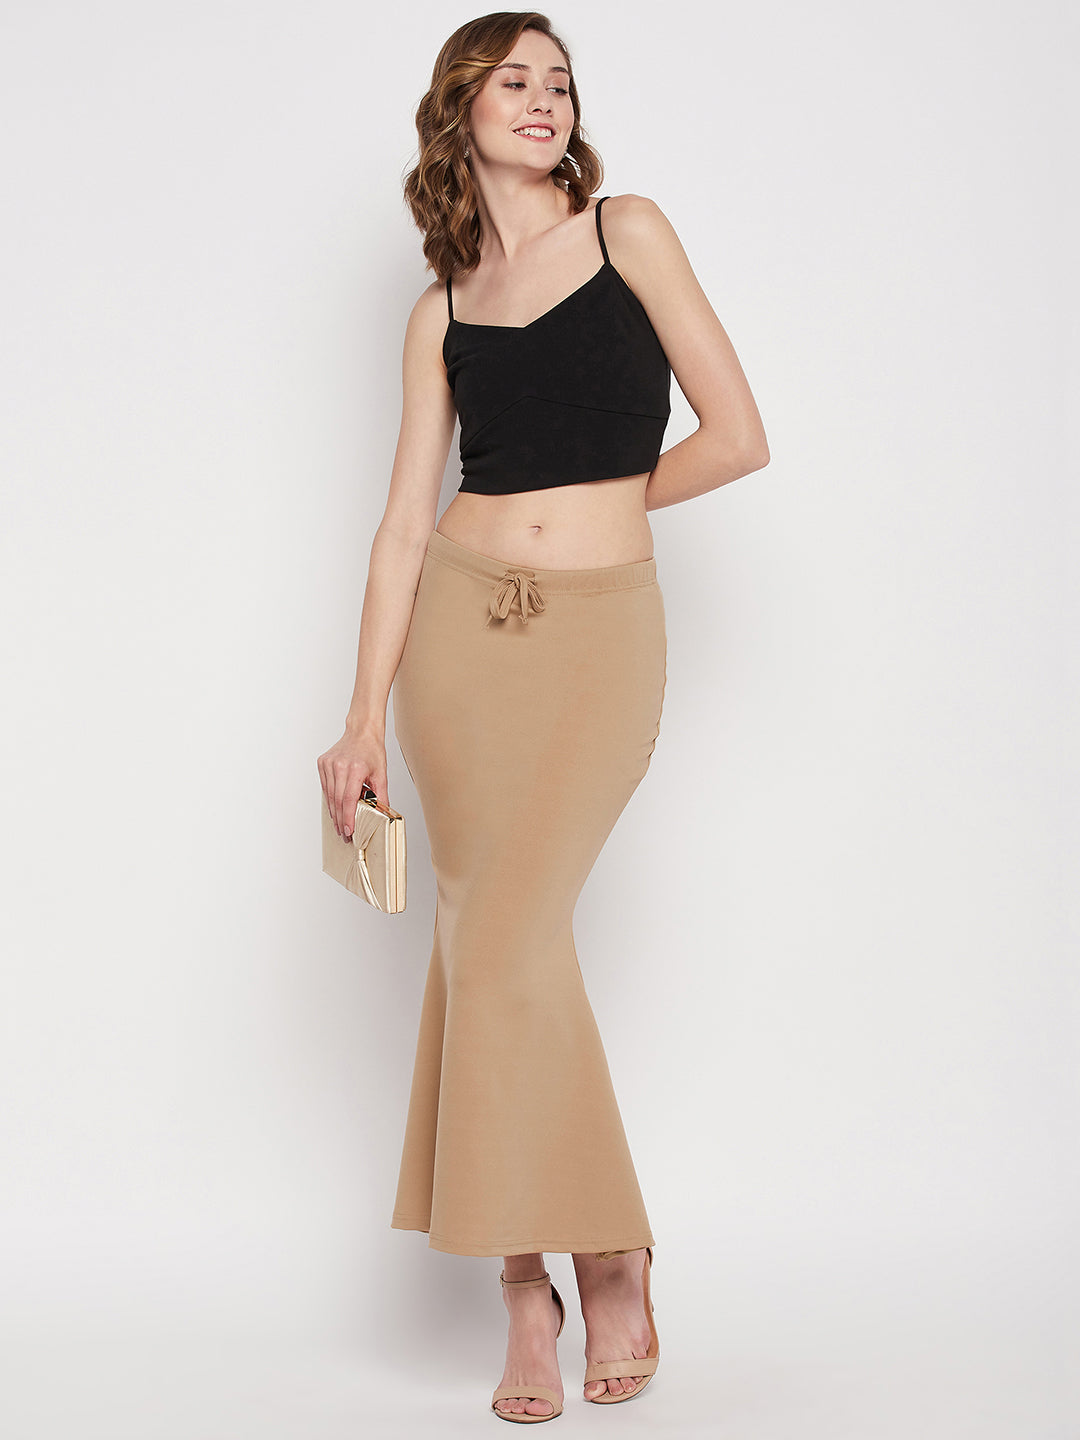 Petticoat for Saree, Maroon Color Women Cotton Straight Shapewear